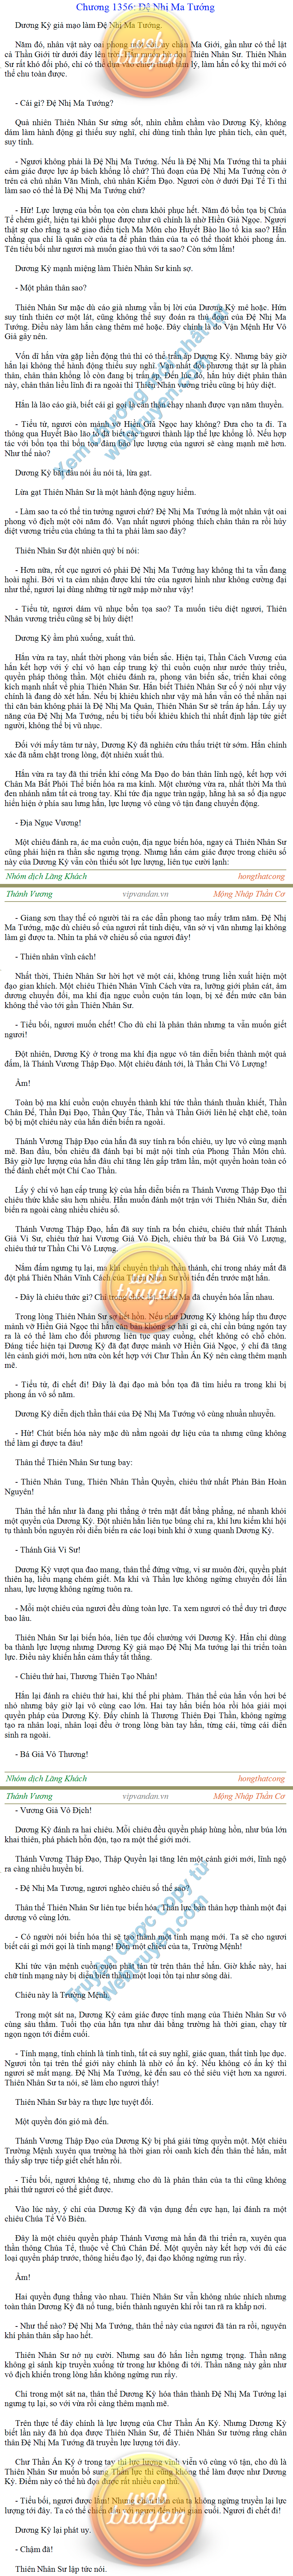 Thanh-vuong-1356.png